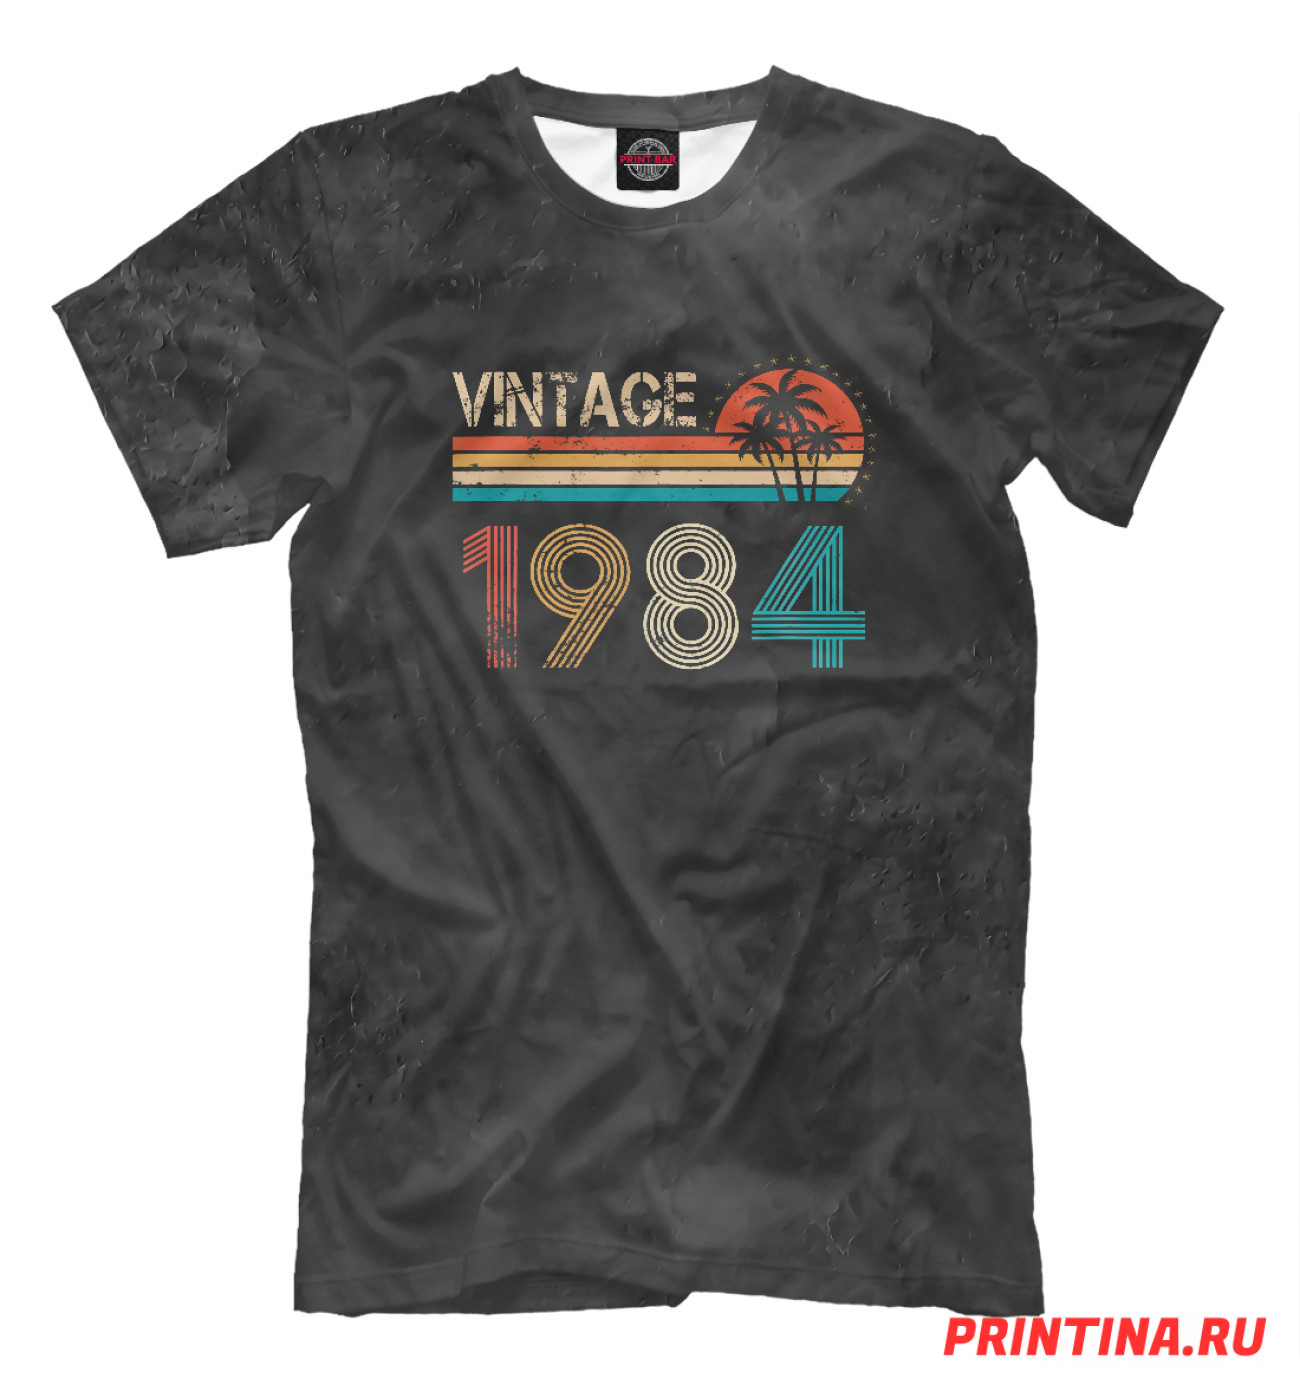 Мужская Футболка Vintage 1984, артикул: DVC-975699-fut-2